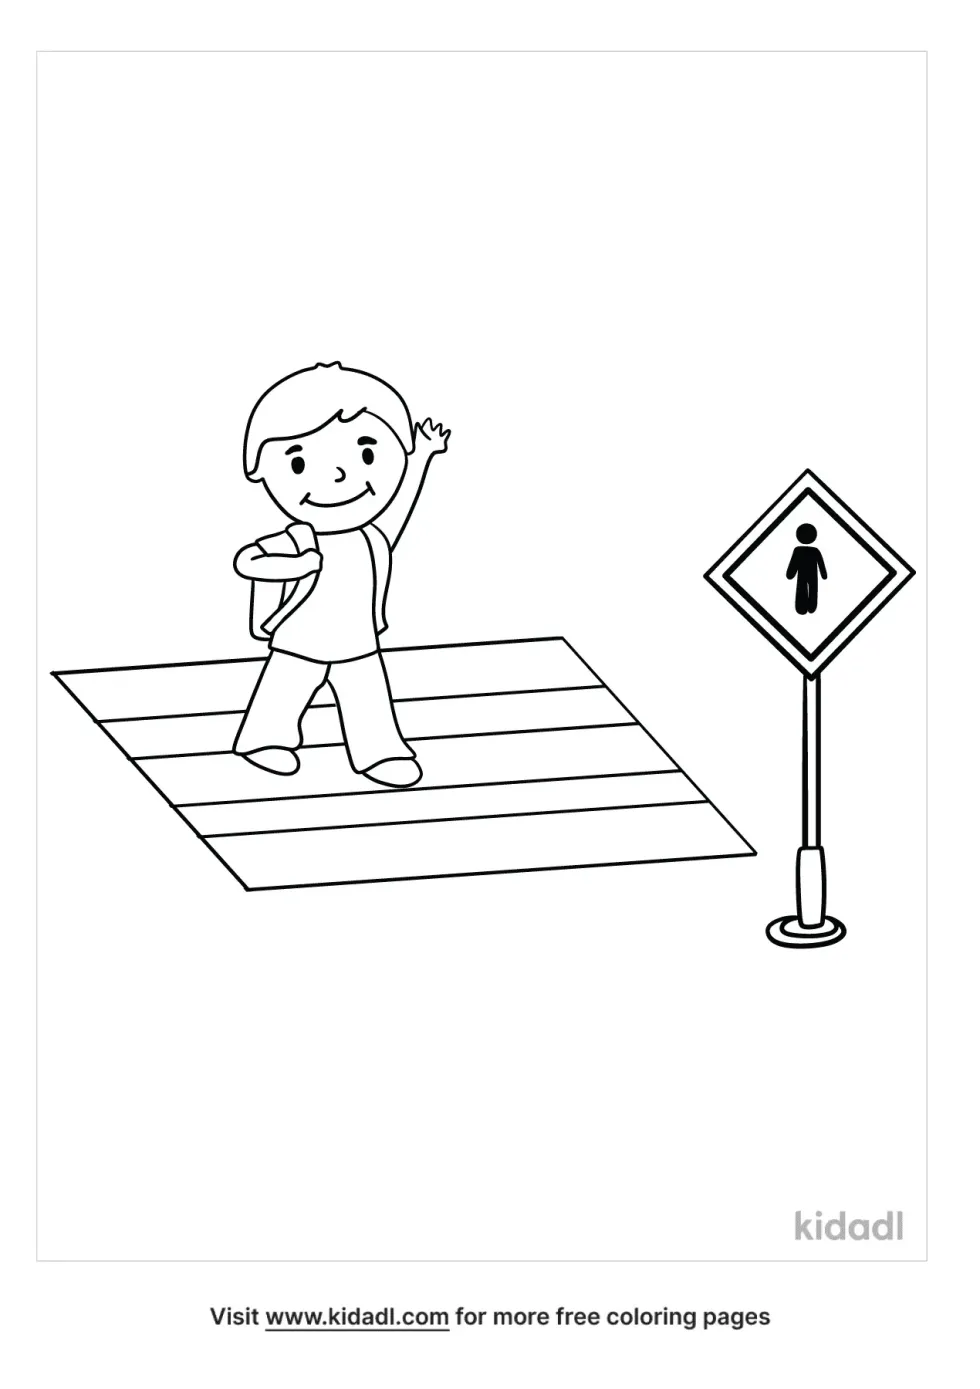 Child And Pedestrian Safety